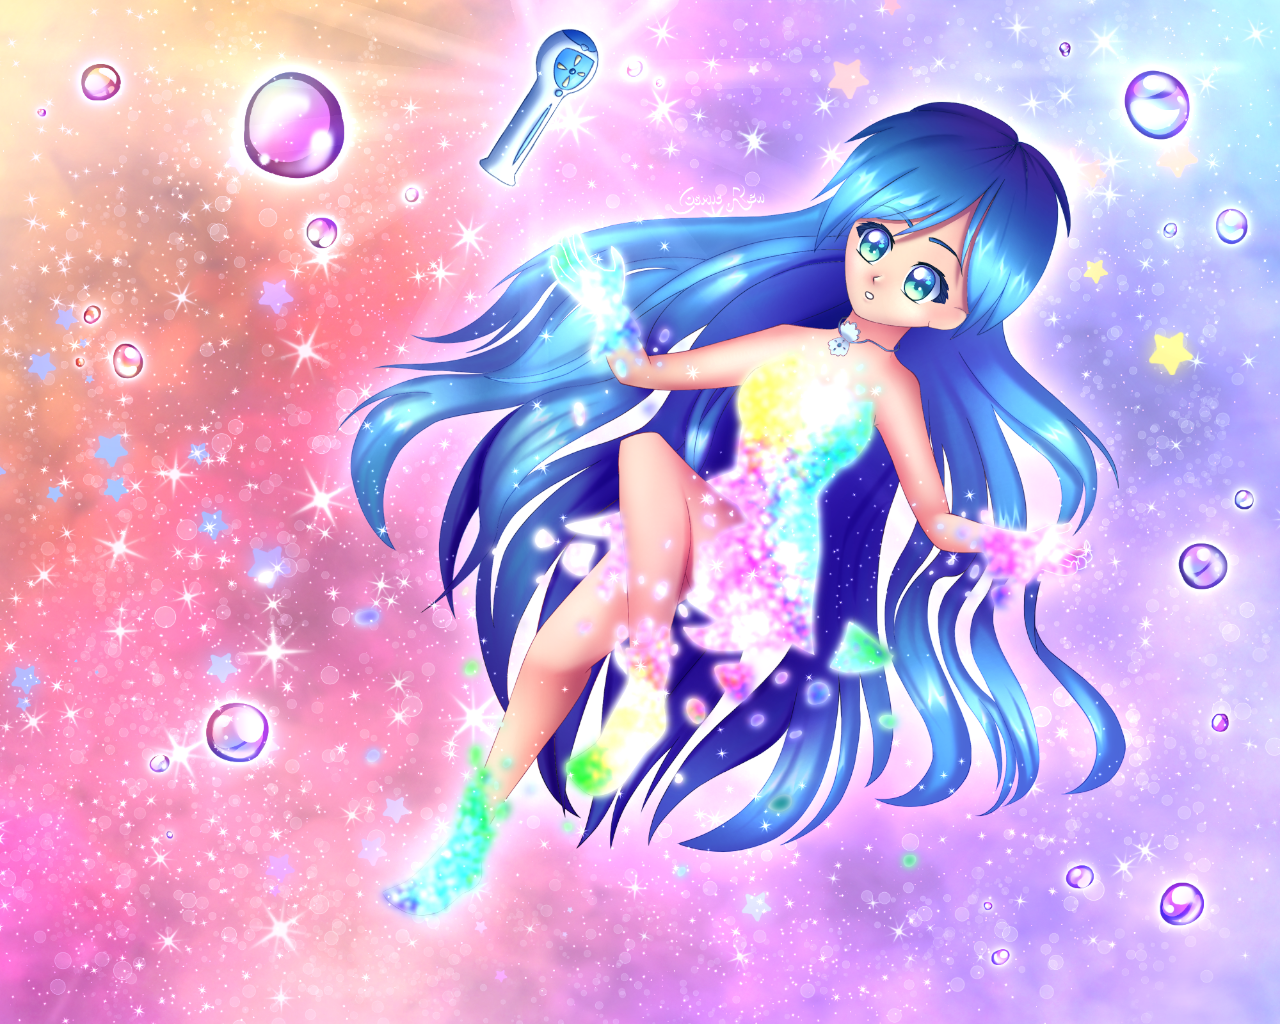 Mermaid Melody Hanon Idol mermaid form by Umbrella6661 on DeviantArt